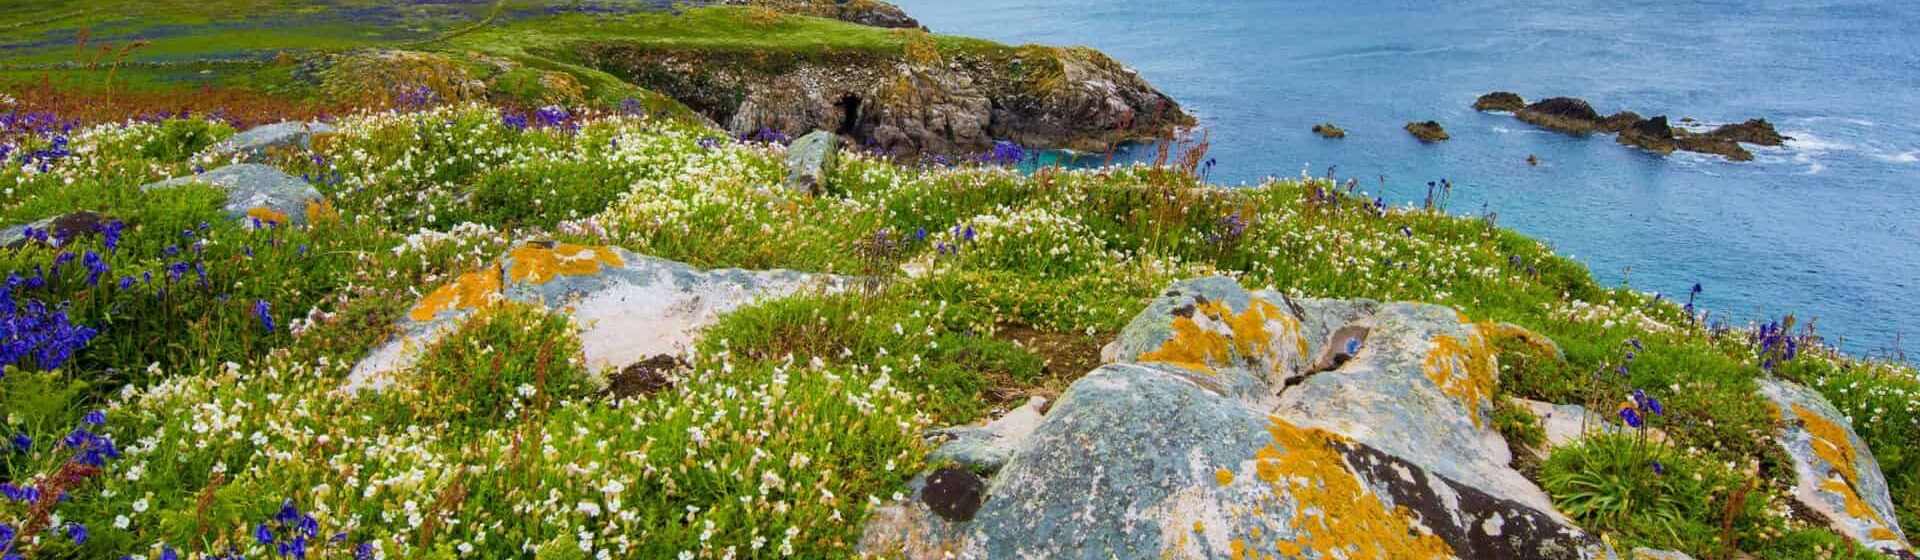 lush greenery on Saltee Island Ireland scaled 1